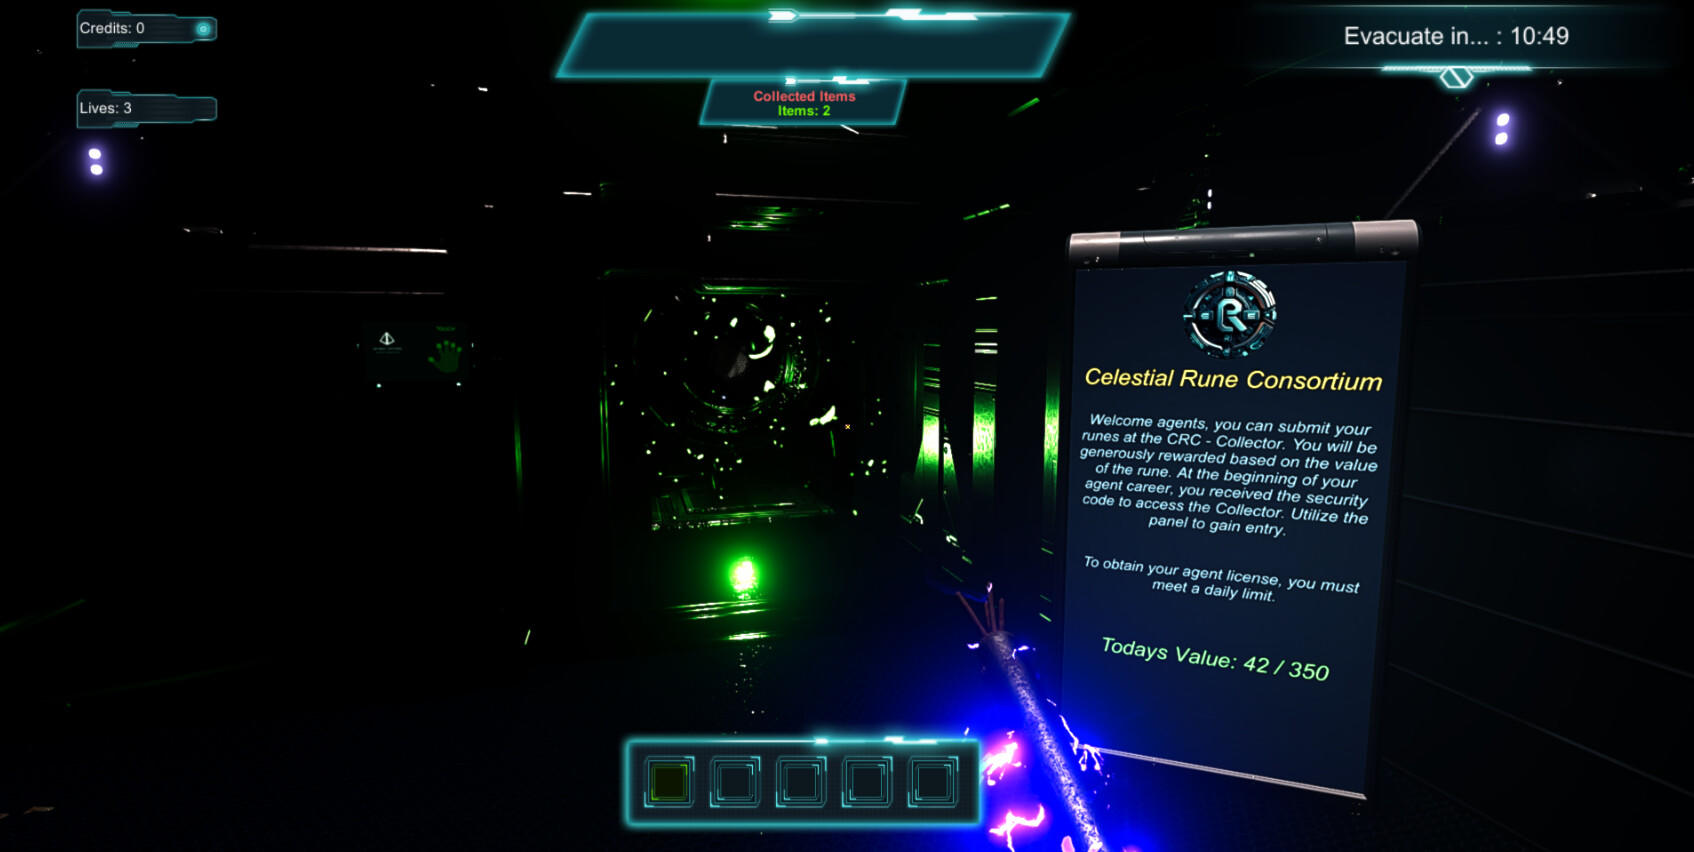 Screenshot of Celestial Rune Consortium: Shadows of Ascension